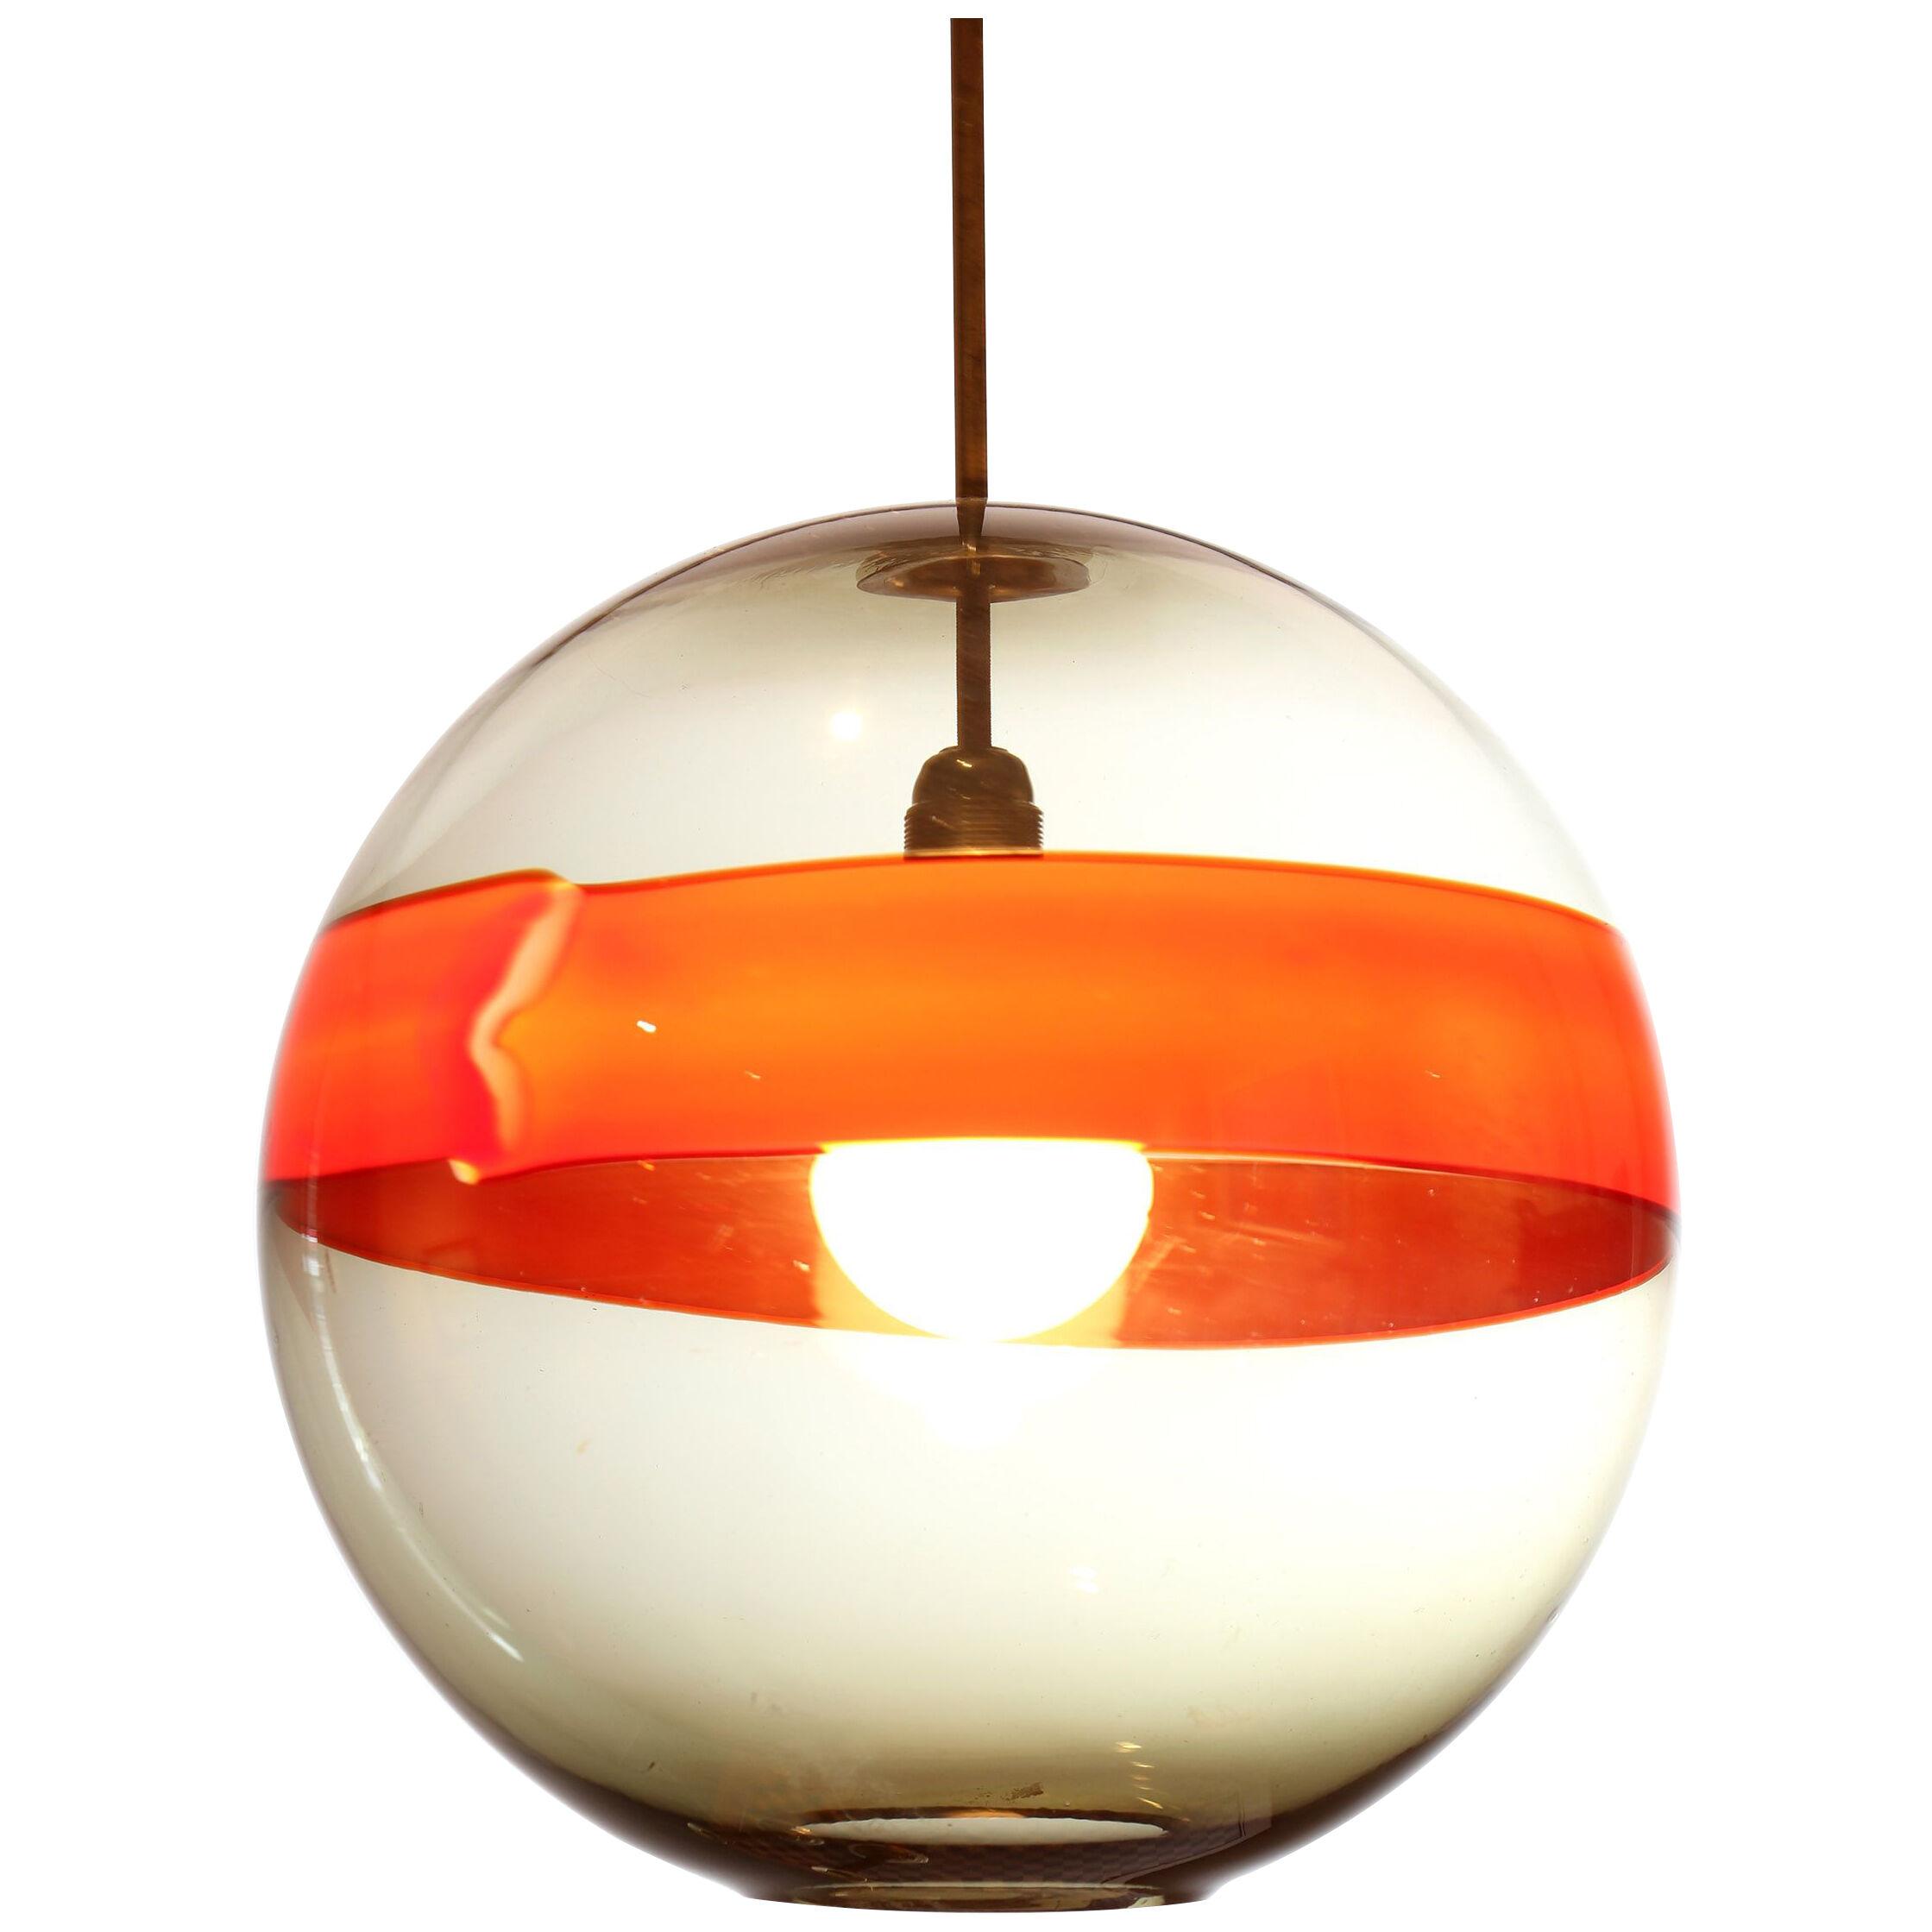 A pendant ceiling light by Venini